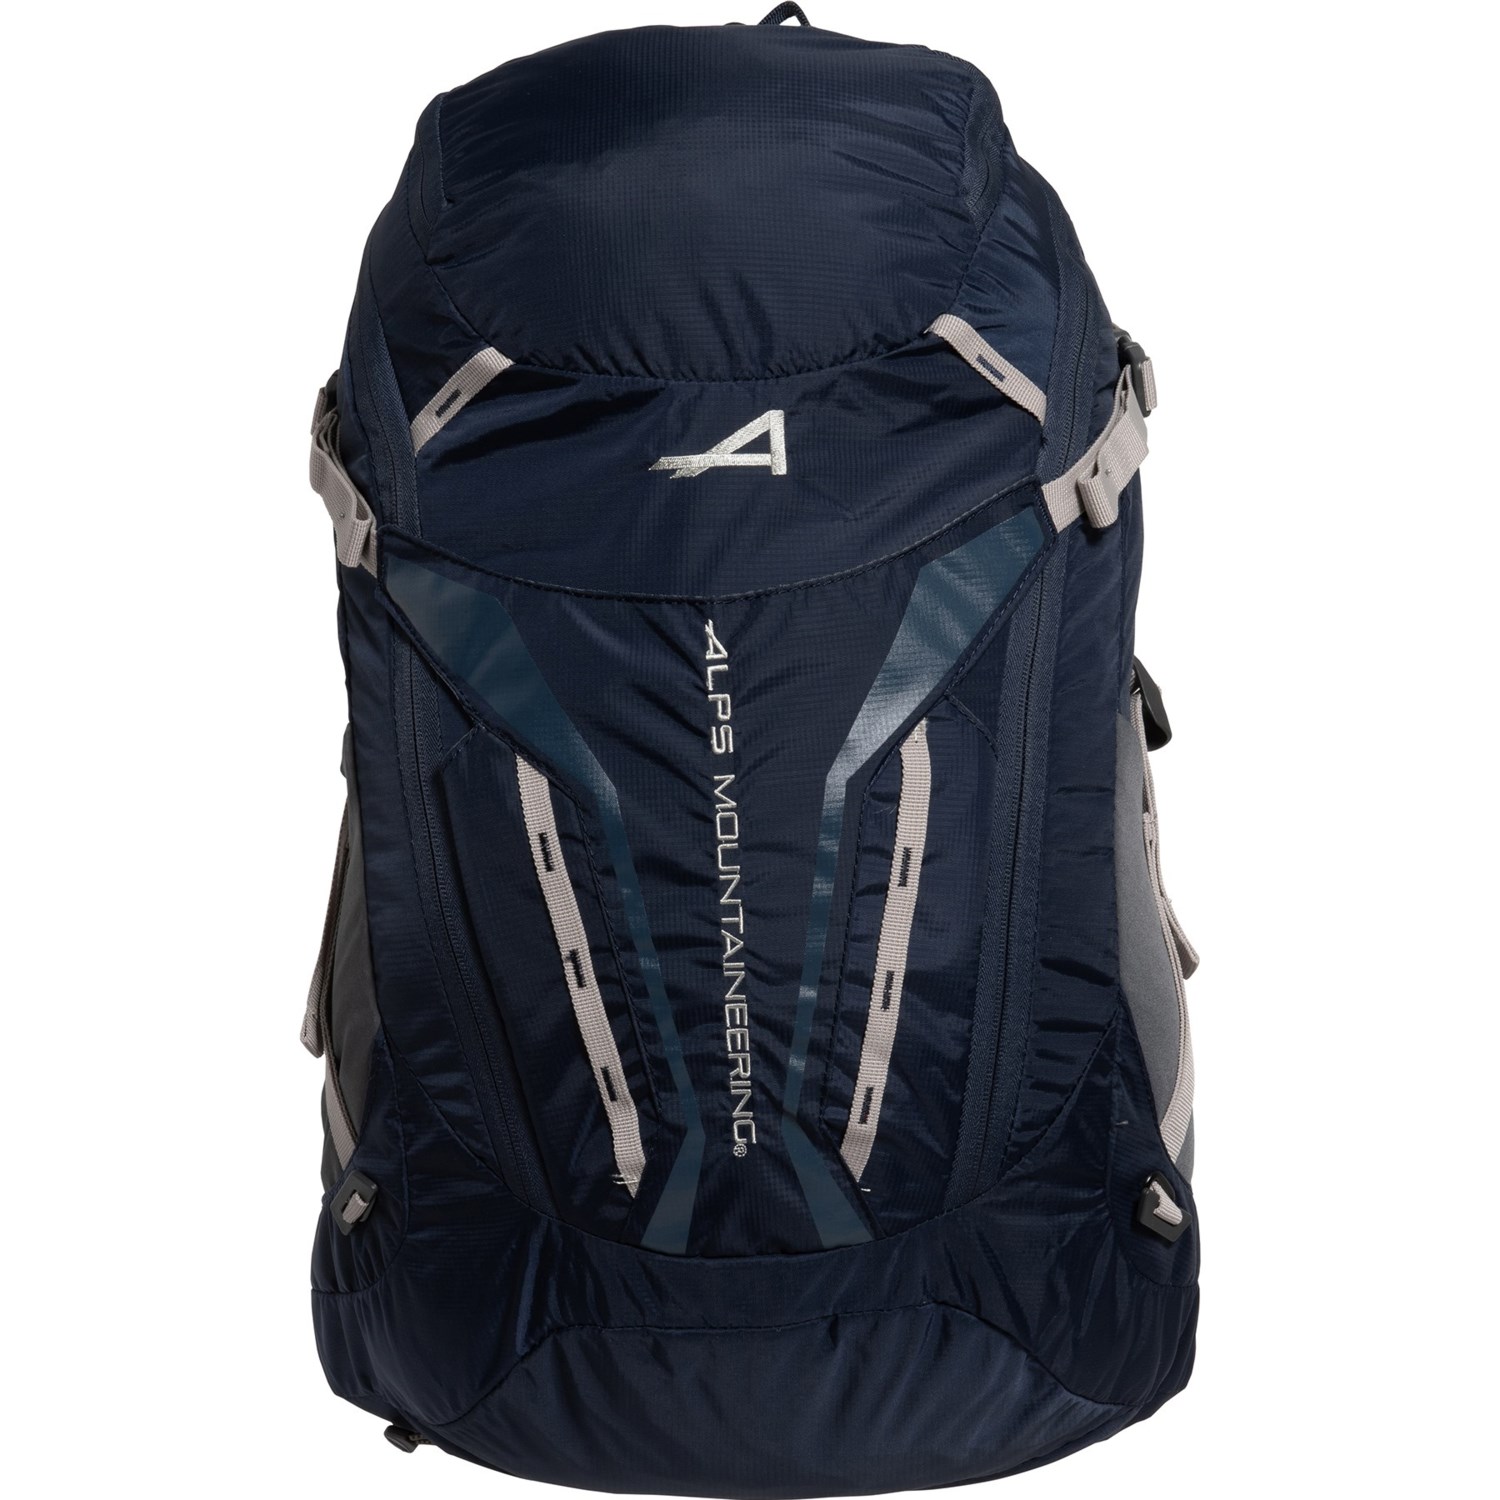 ALPS Mountaineering Baja 20 L Backpack - Internal Frame, Navy-Gray